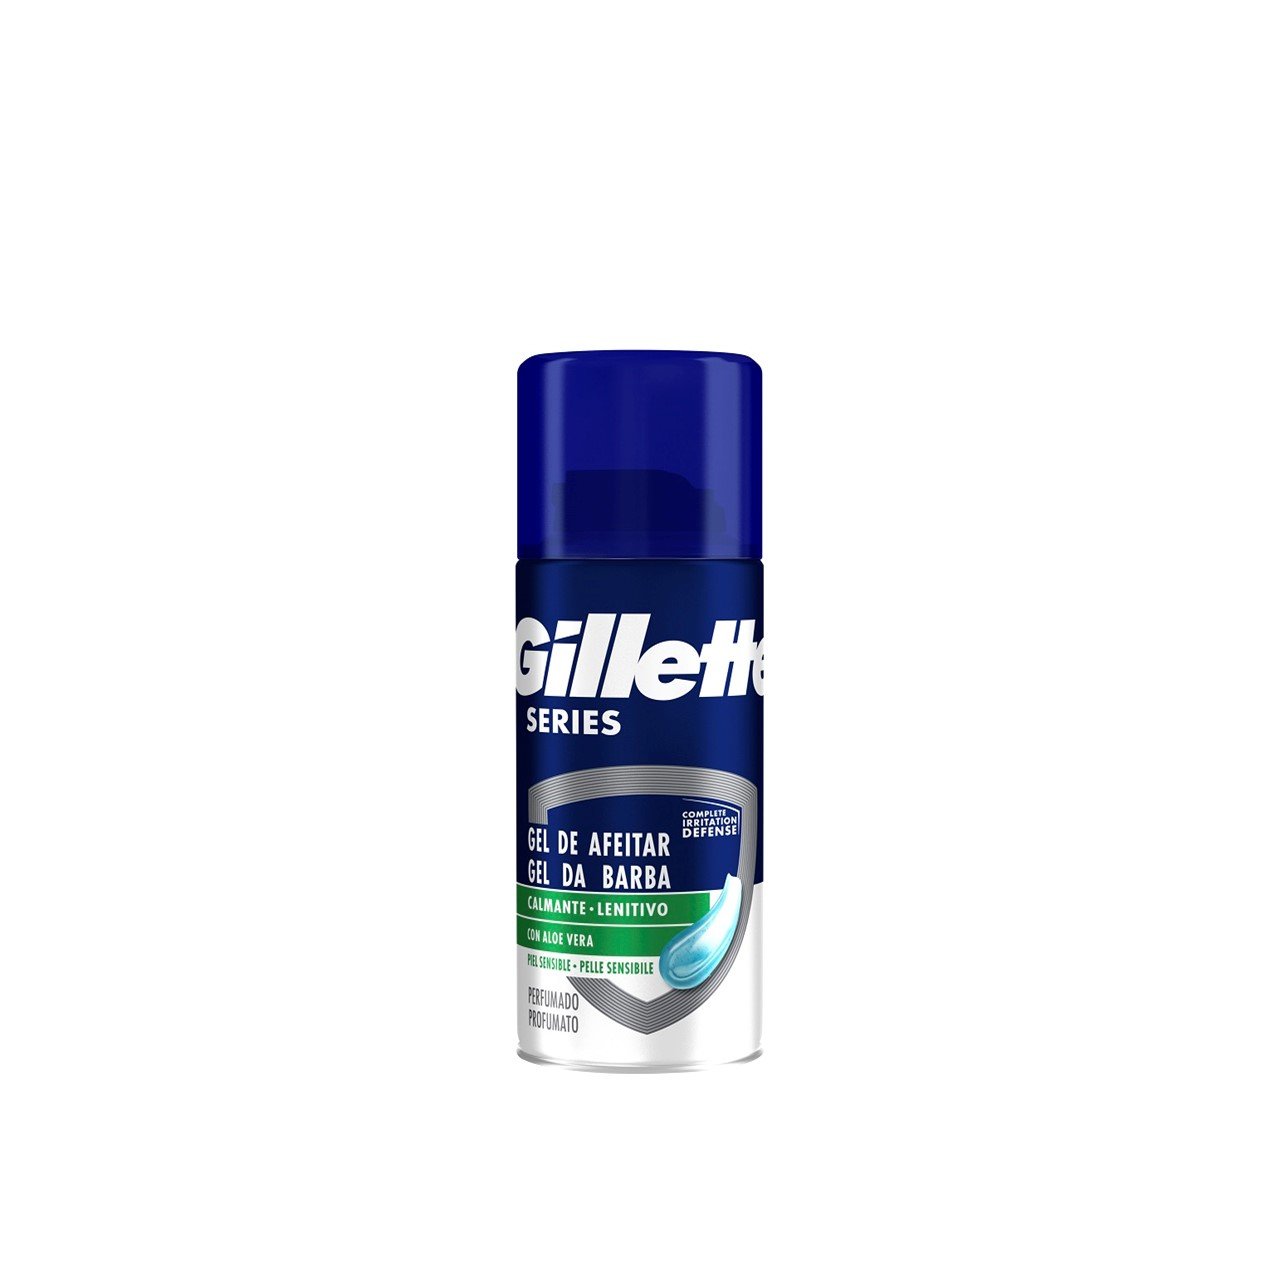 Gillette Series Soothing Shaving Gel With Aloe Vera 75ml